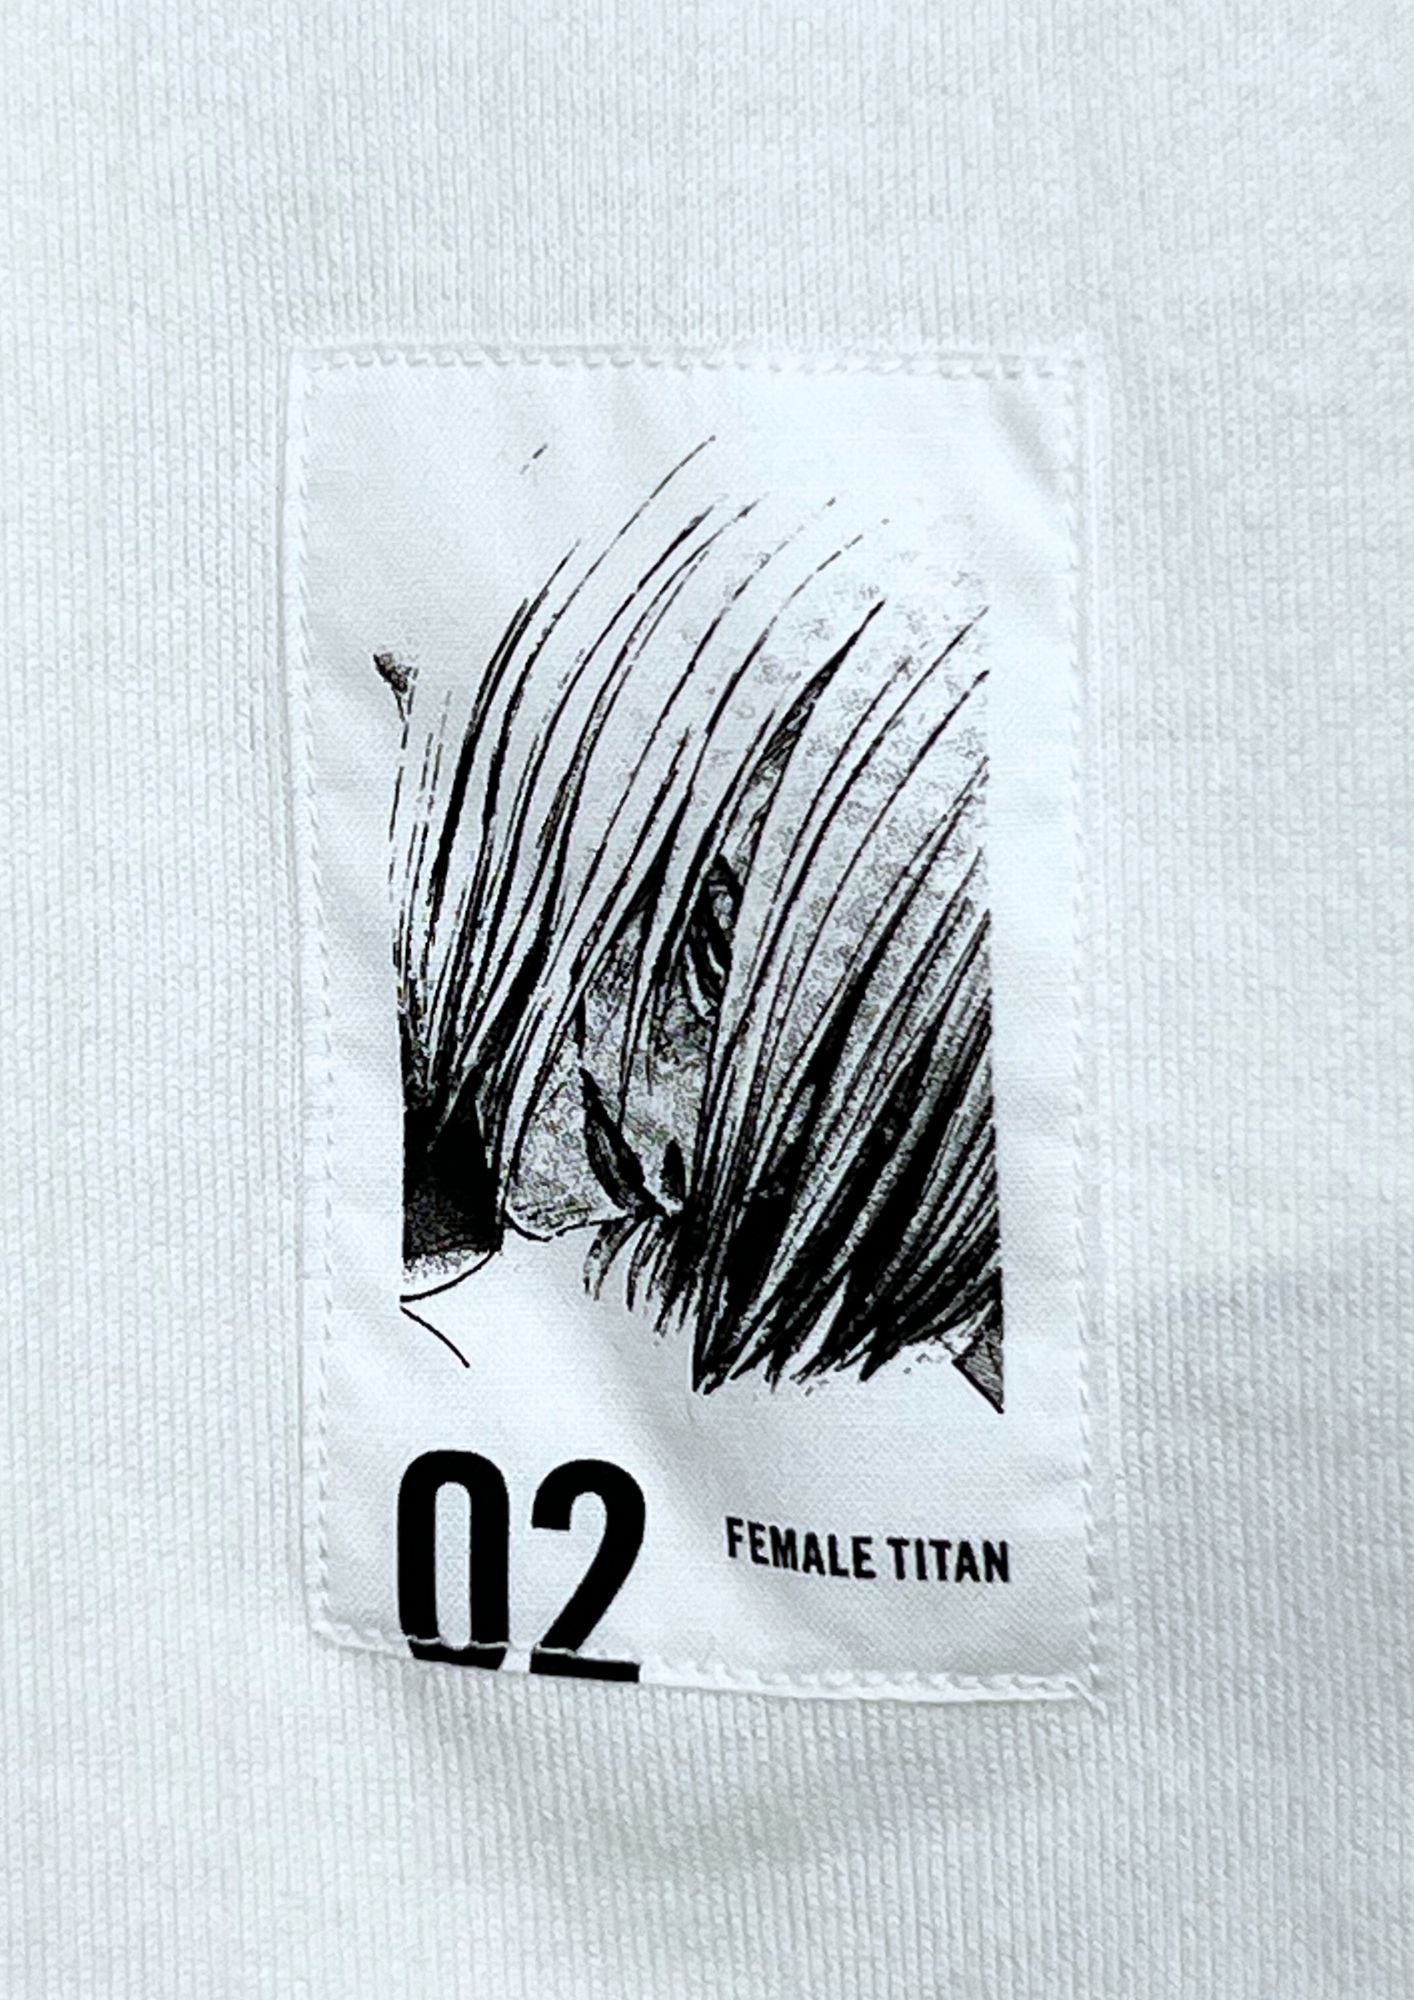 Attack on Titan x ANREALGE Female Titan 02 UV Print Changing Colour T-shirt